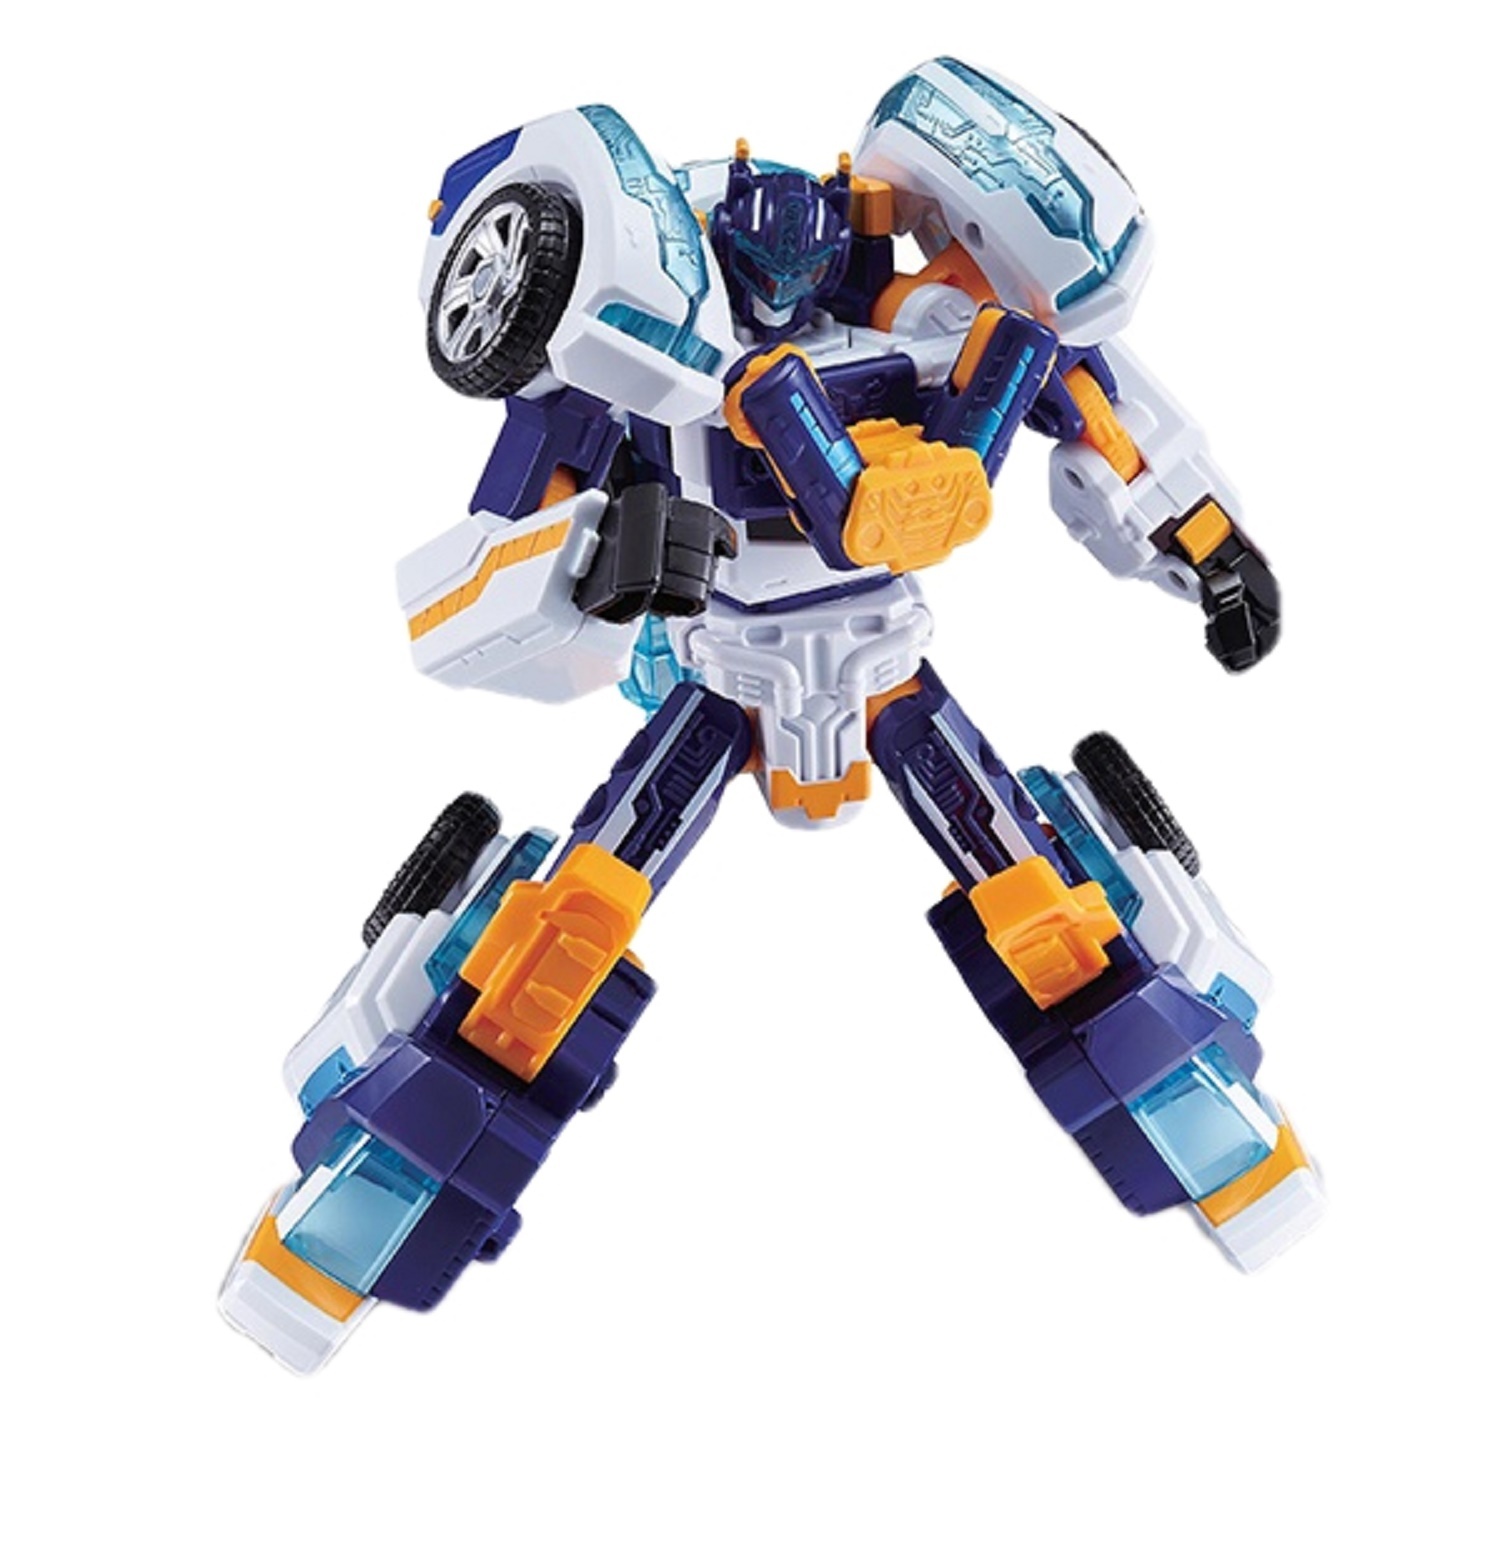  Tobot V  Lightning Transformation Action Figure Robot  